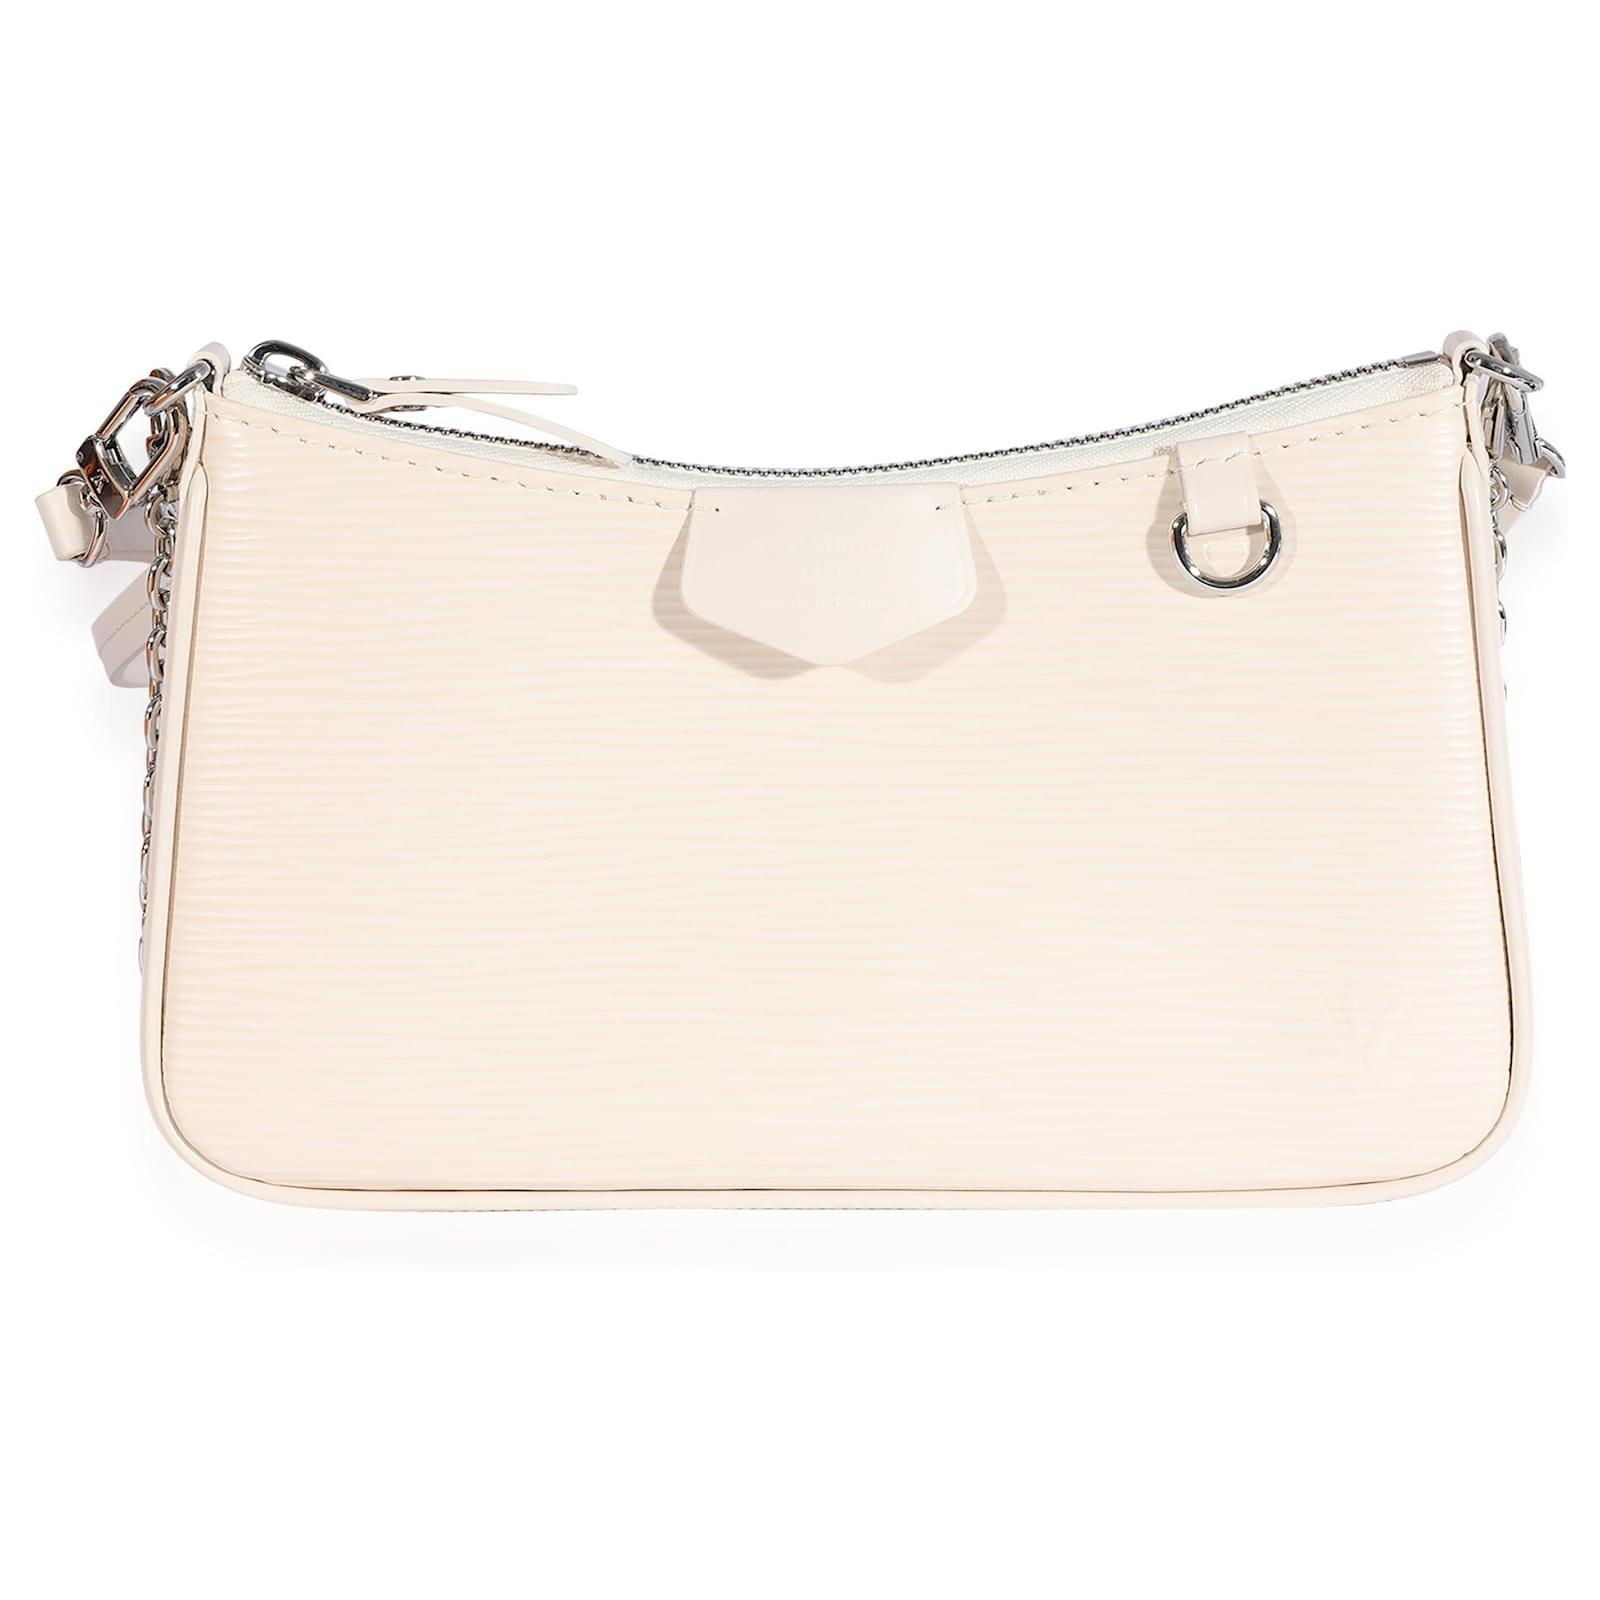 Louis Vuitton Easy Pouch on Strap Handbag